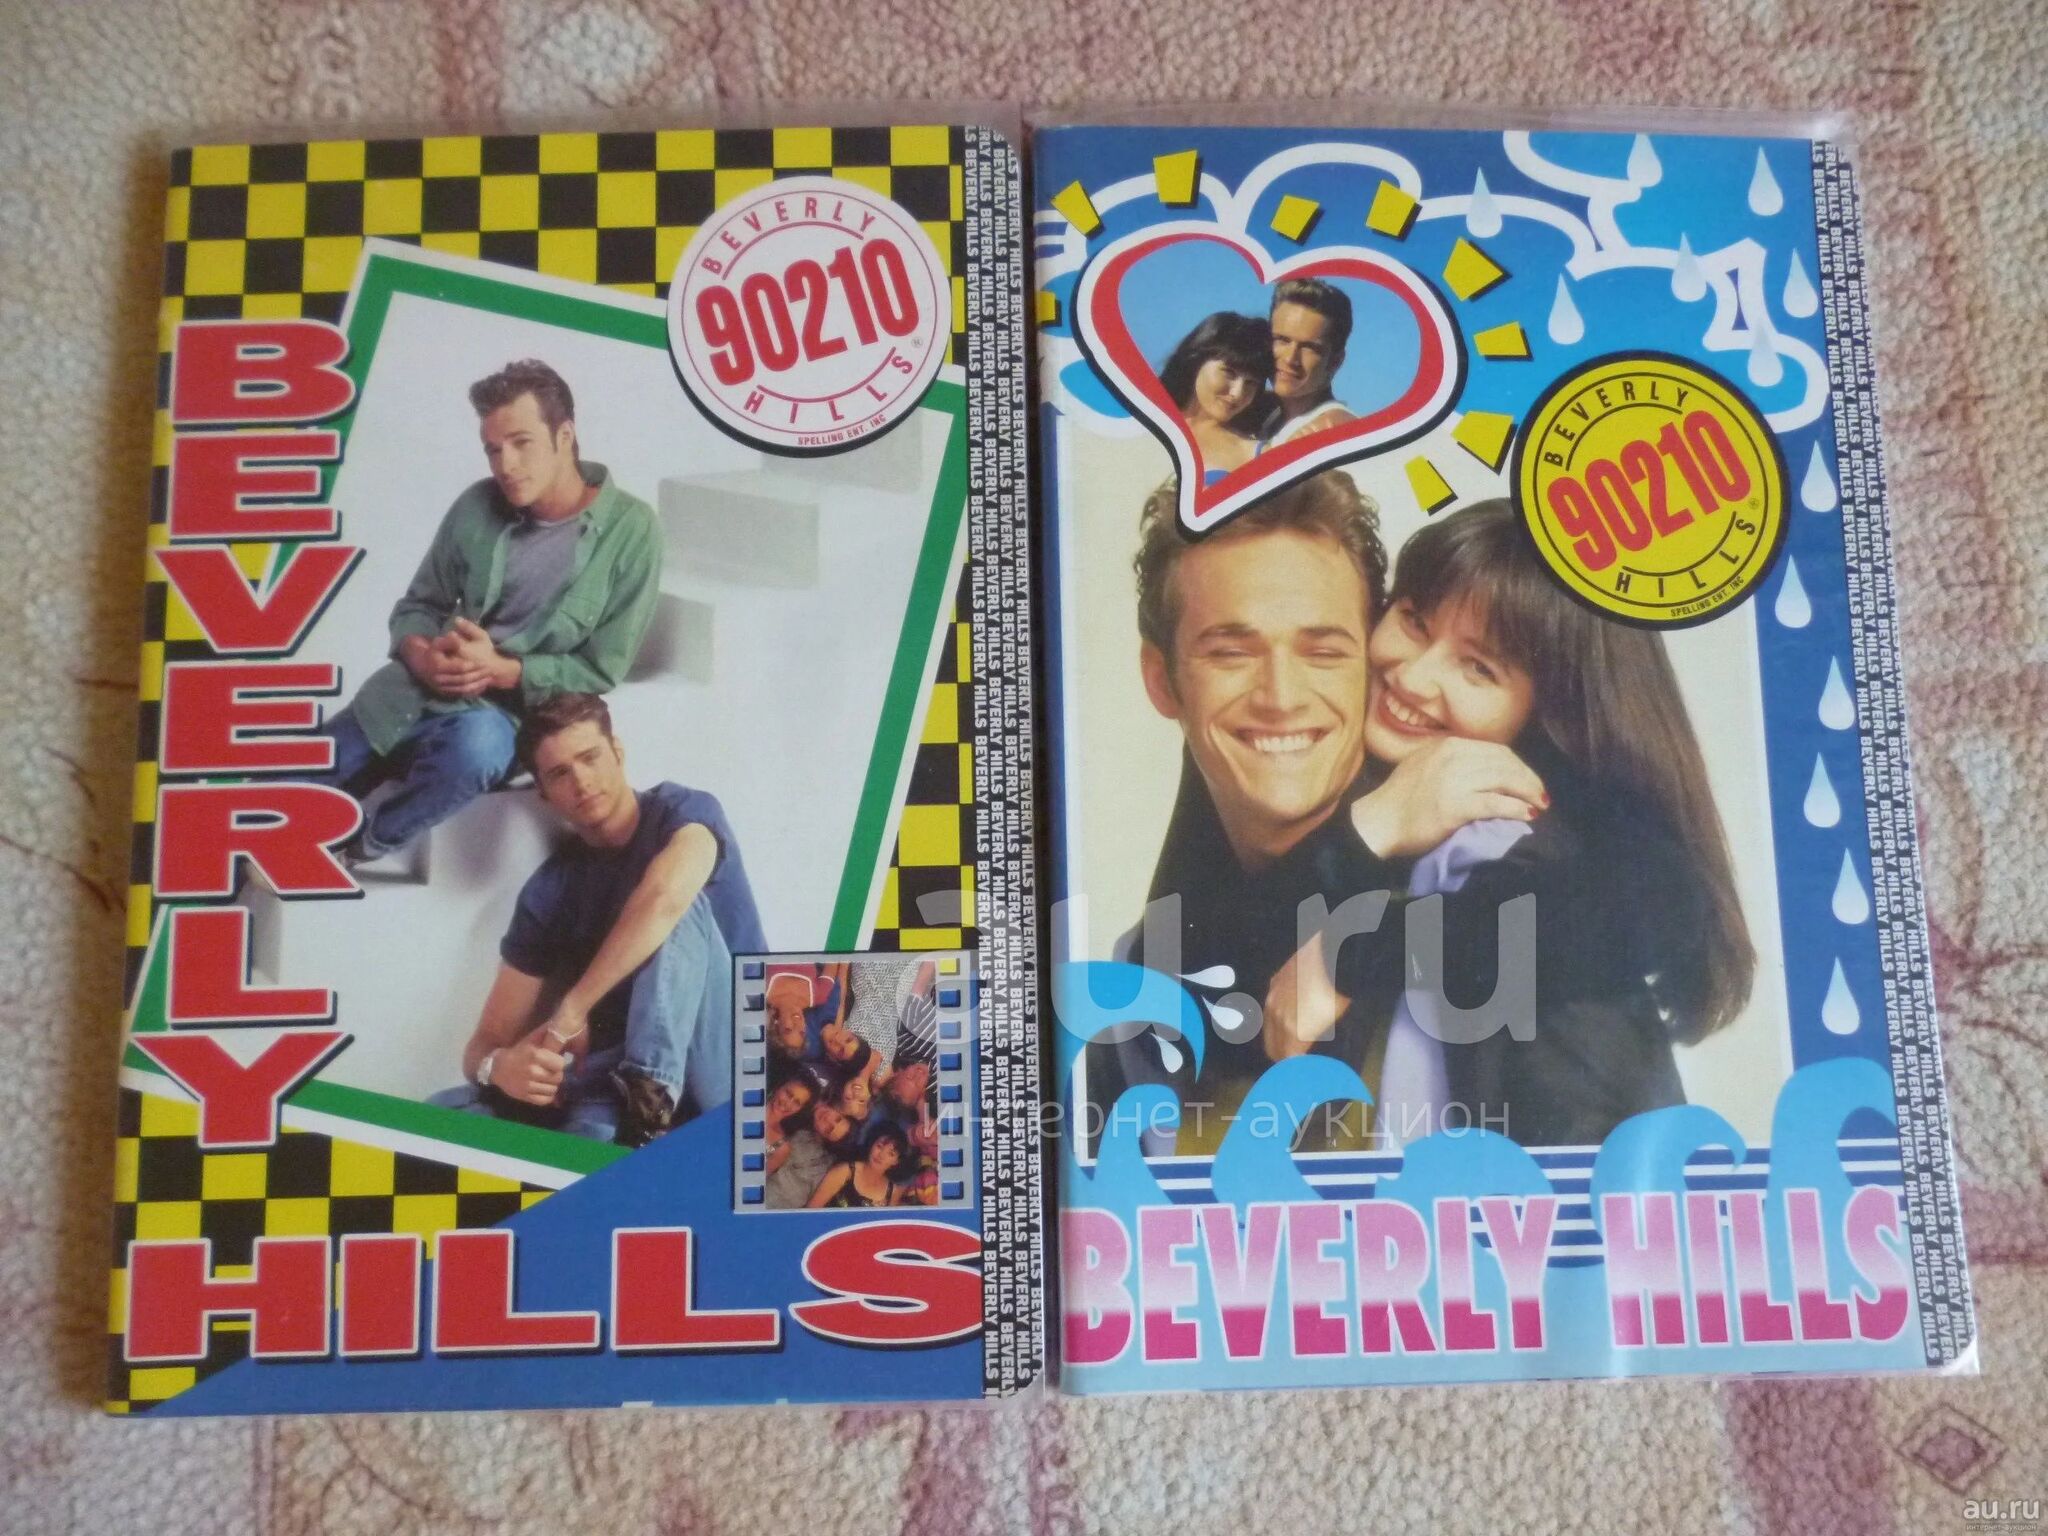 Beverly Hills 90210 notebooks - Retro, Nostalgia, Notebook